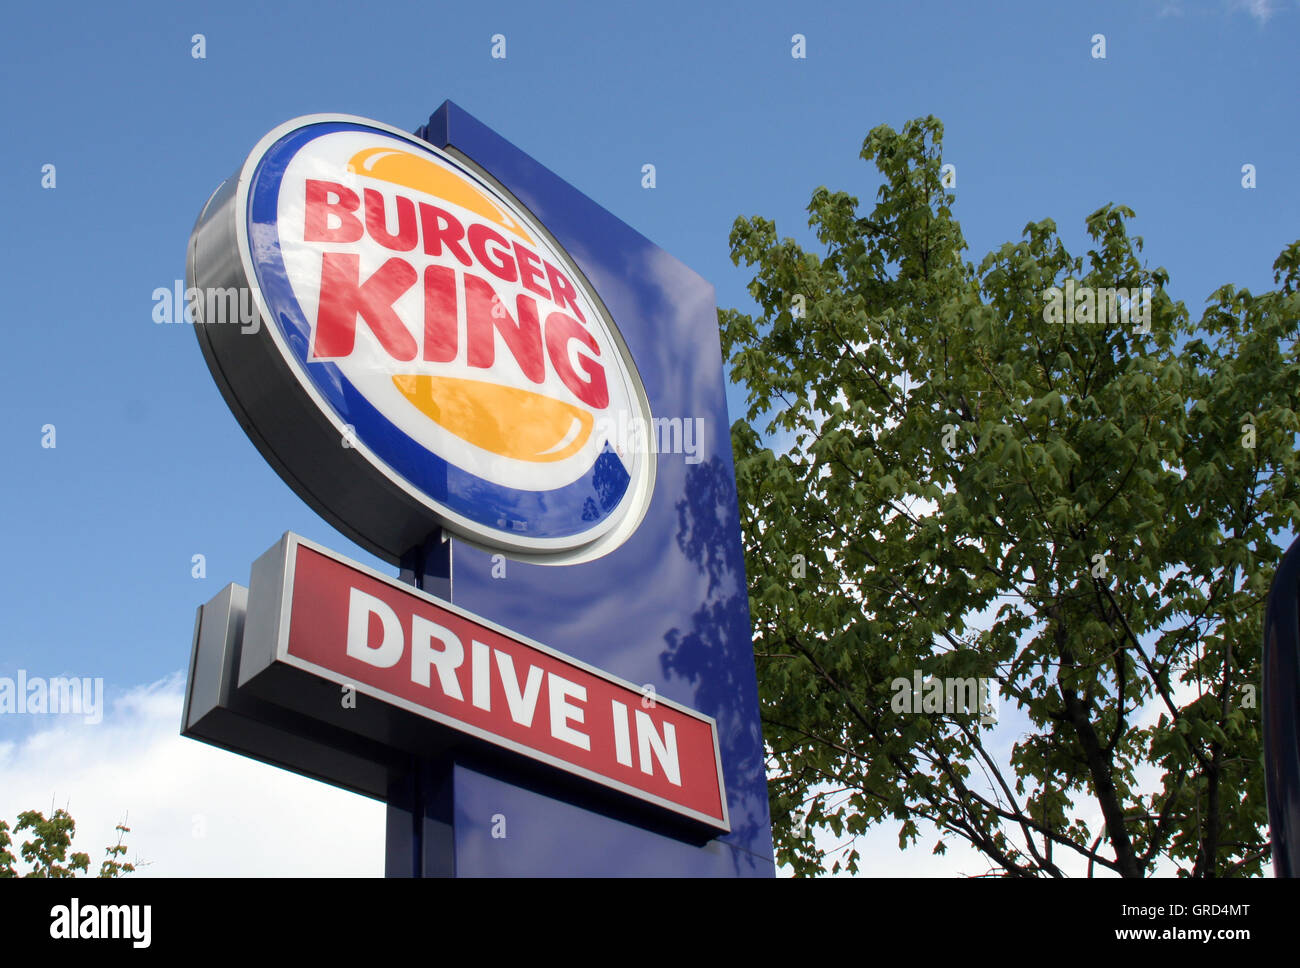 Burger King Nuevo Logo